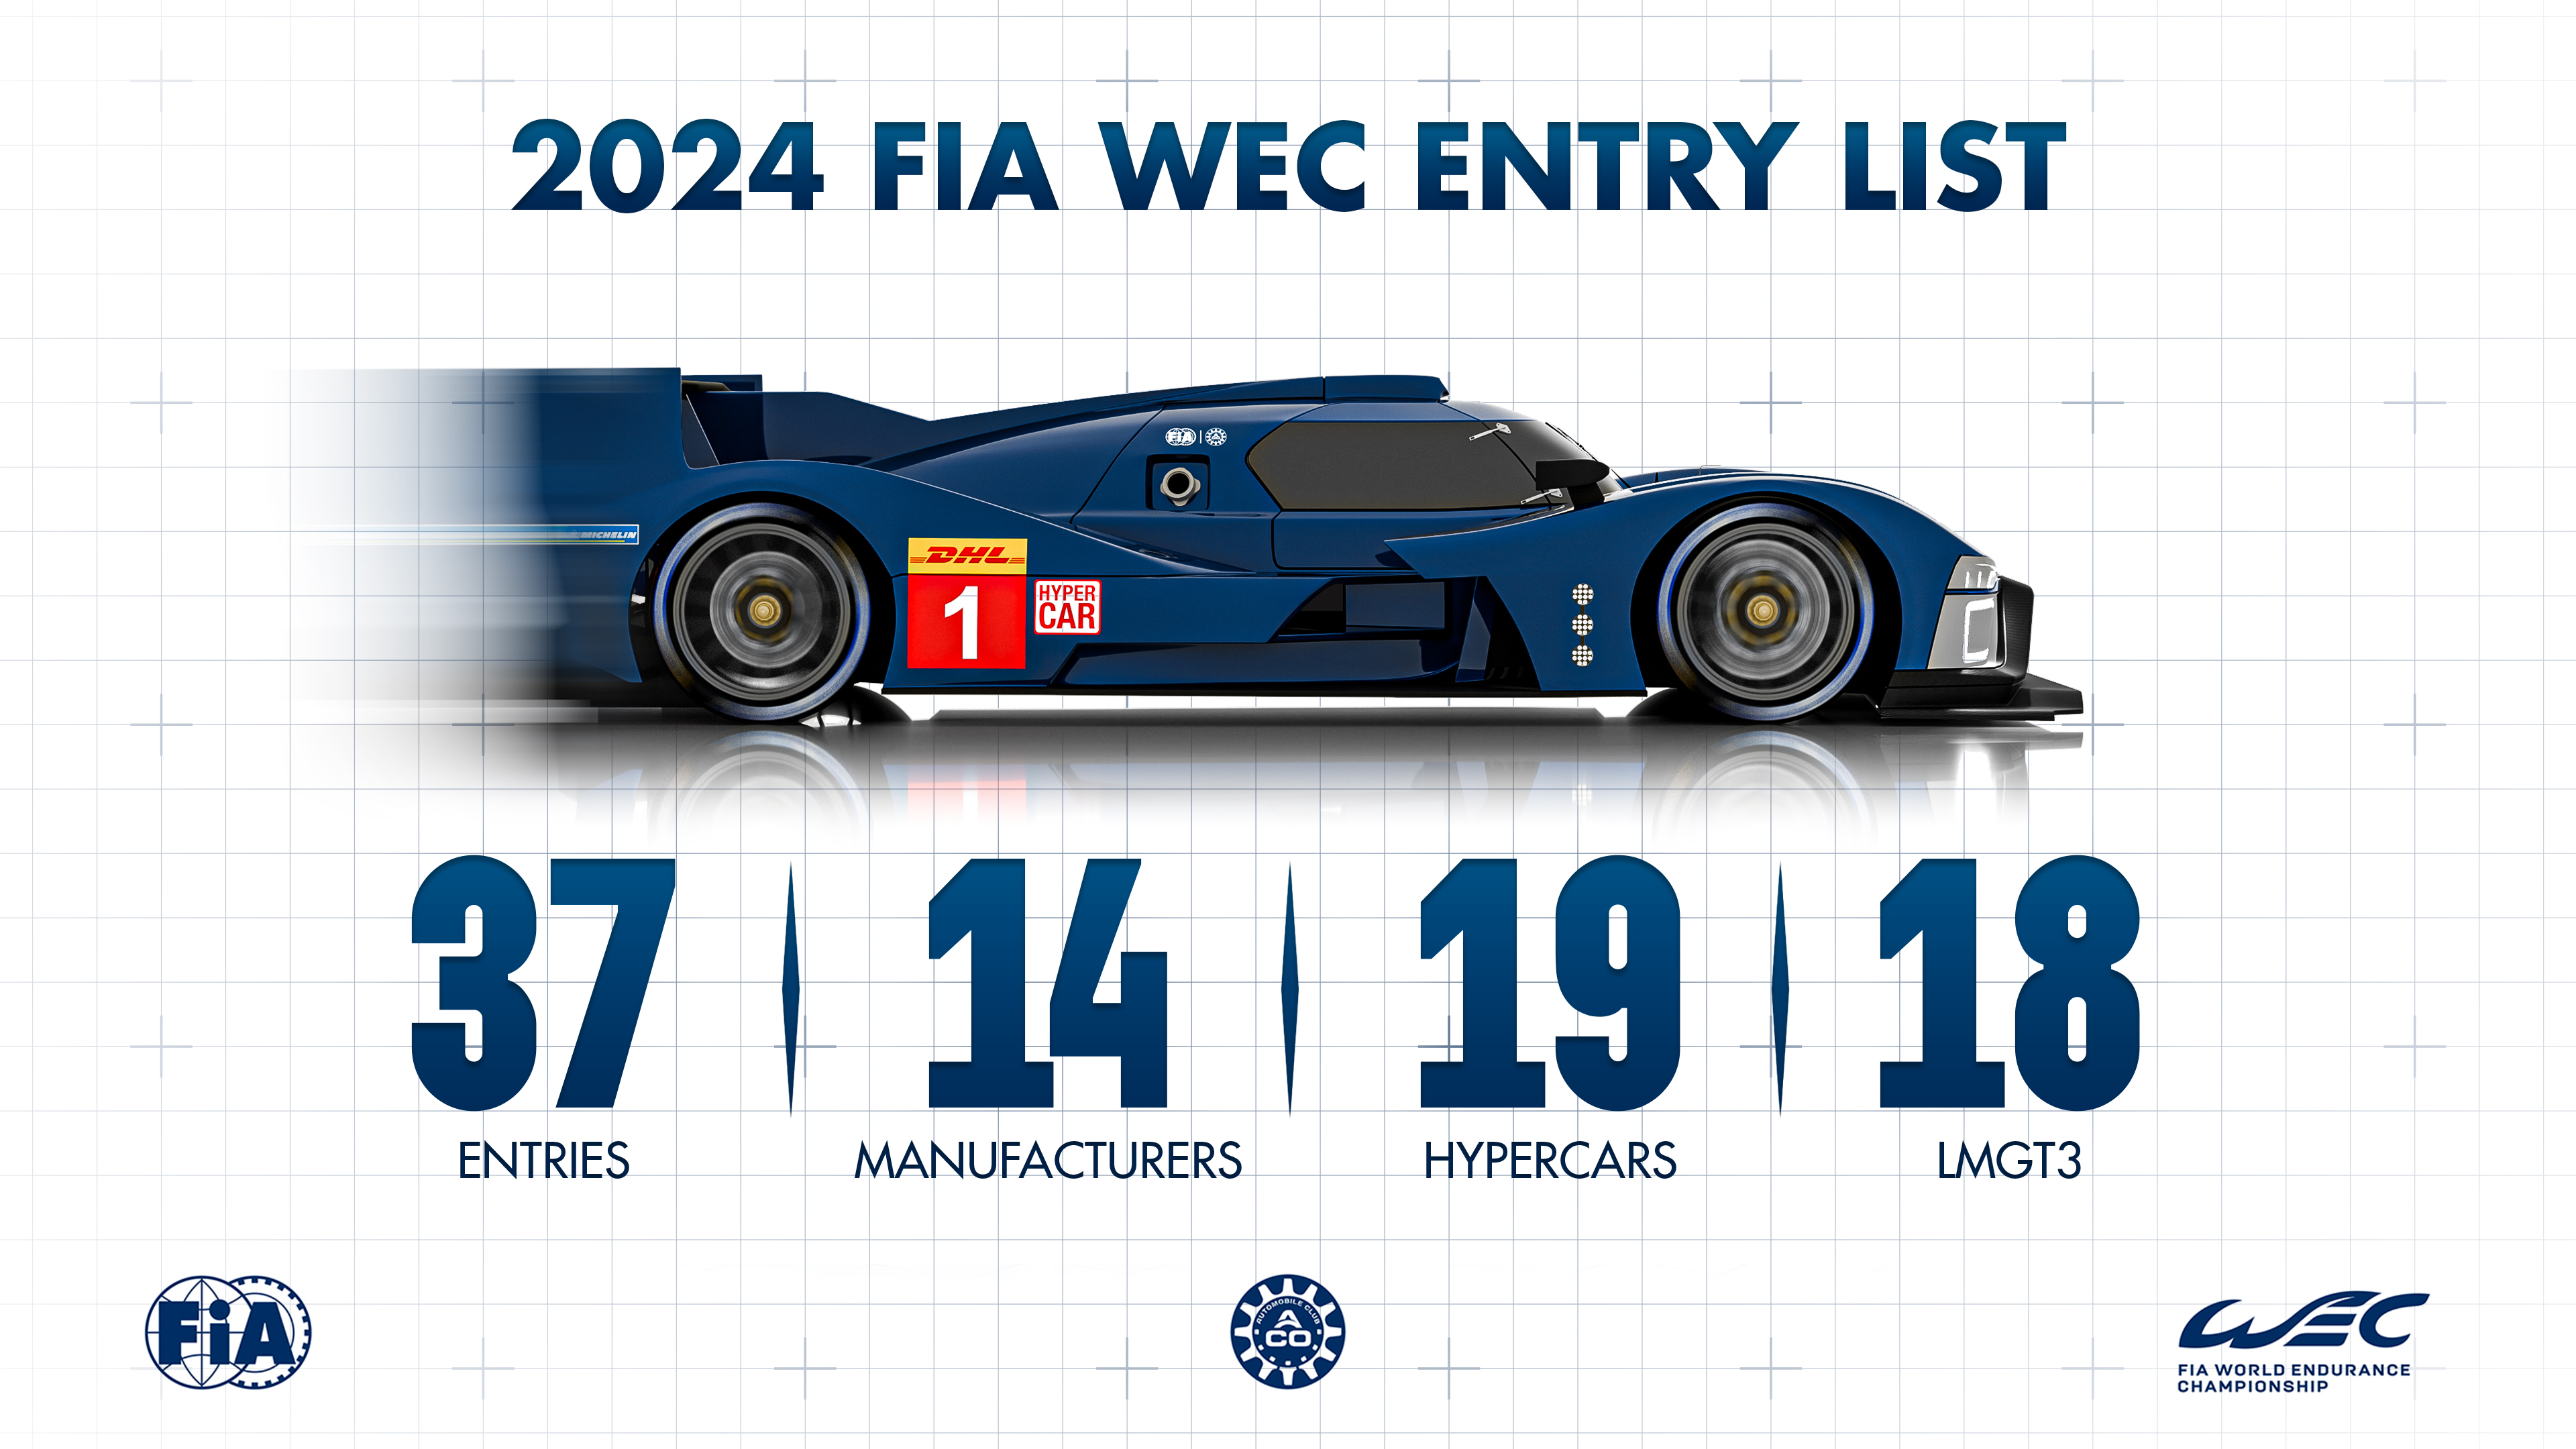 Where to watch the FIA WEC in 2021 - FIA World Endurance Championship